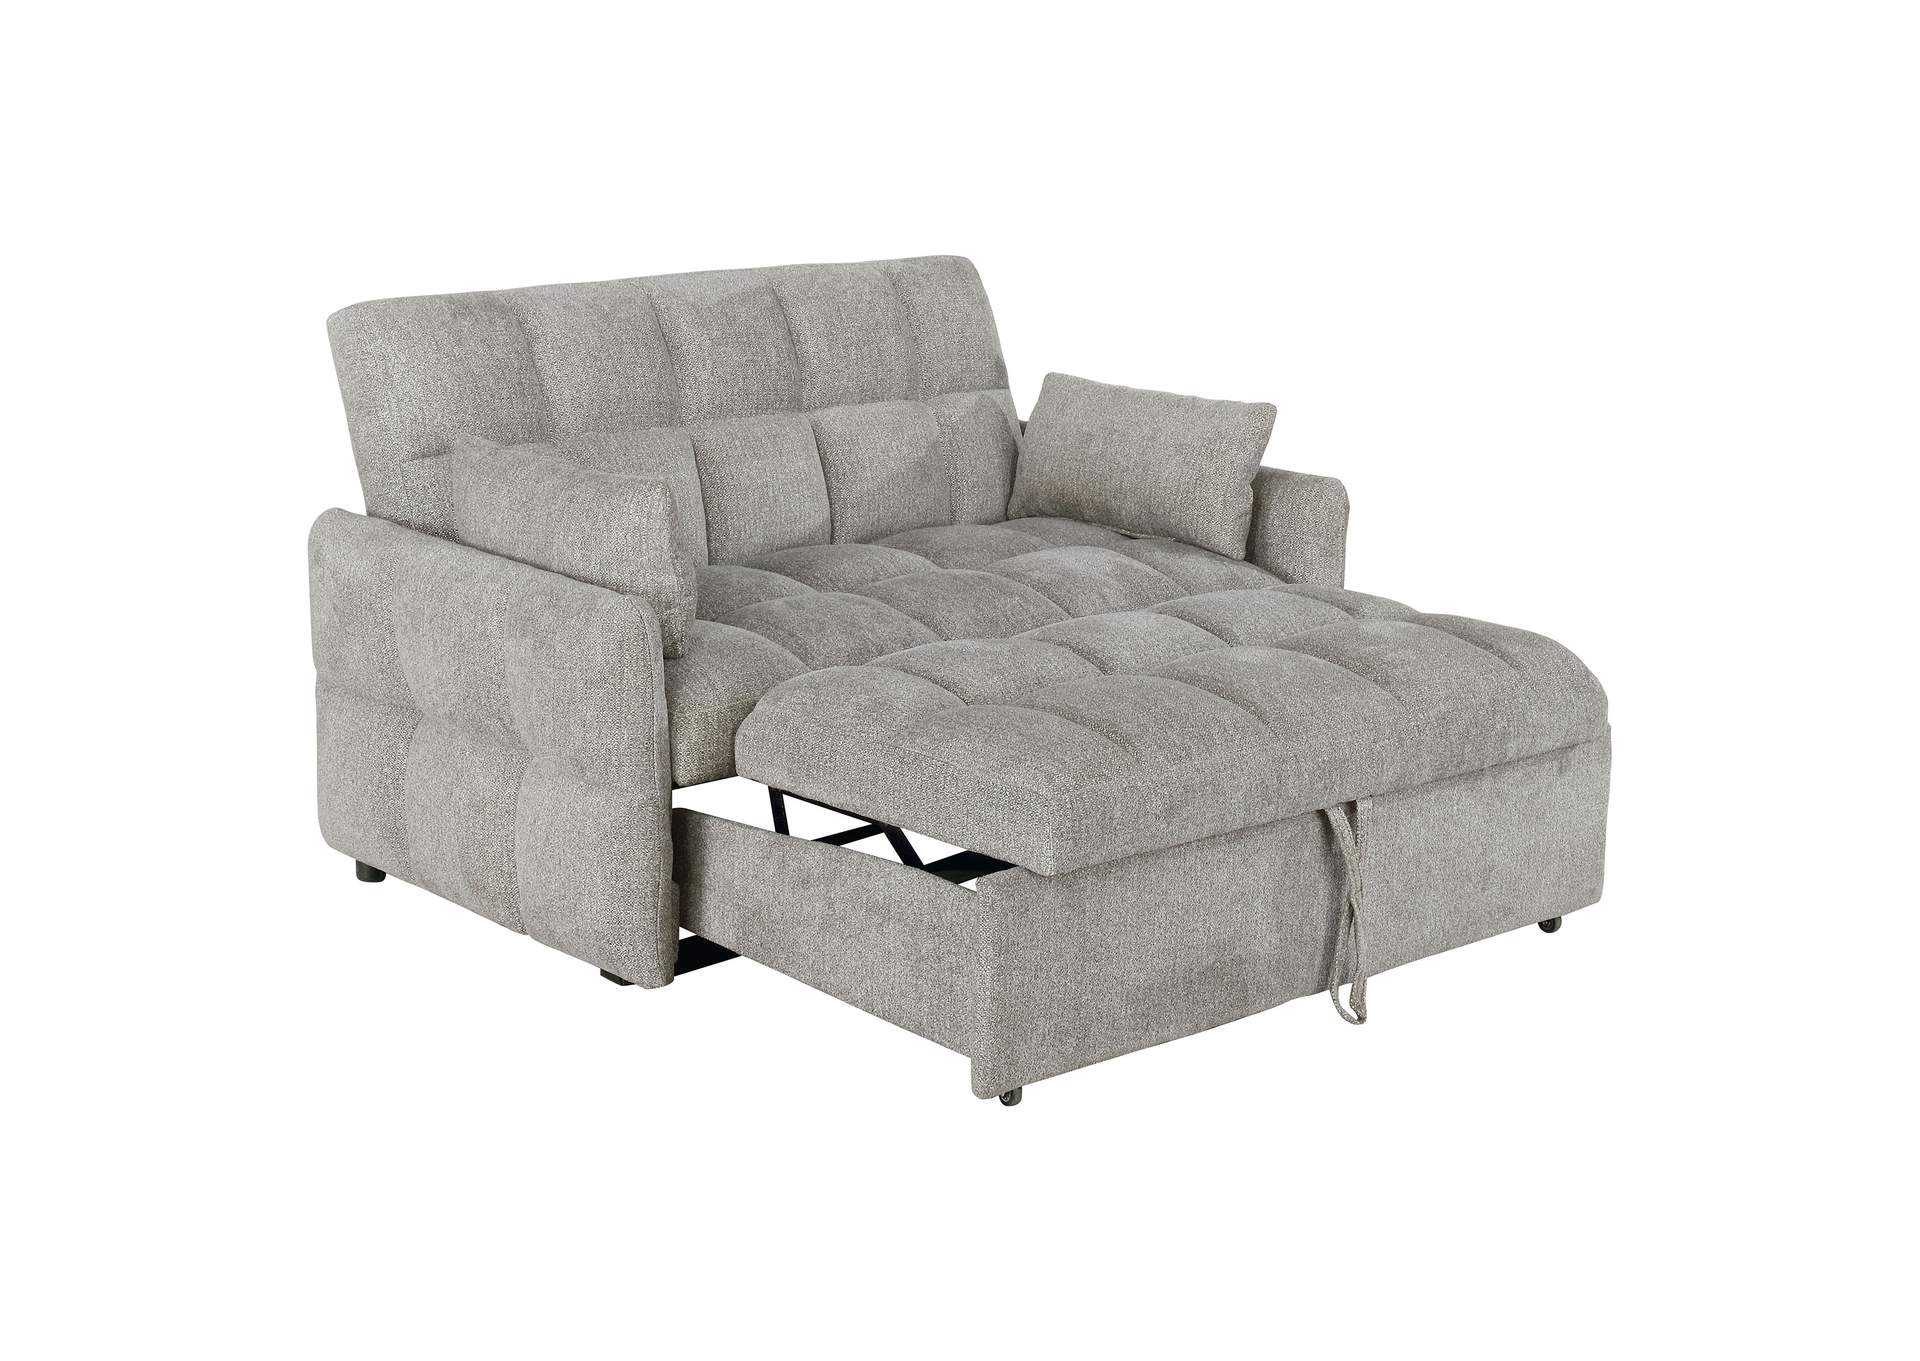 Cotswold Tufted Cushion Sleeper Sofa Bed Beige,Coaster Furniture